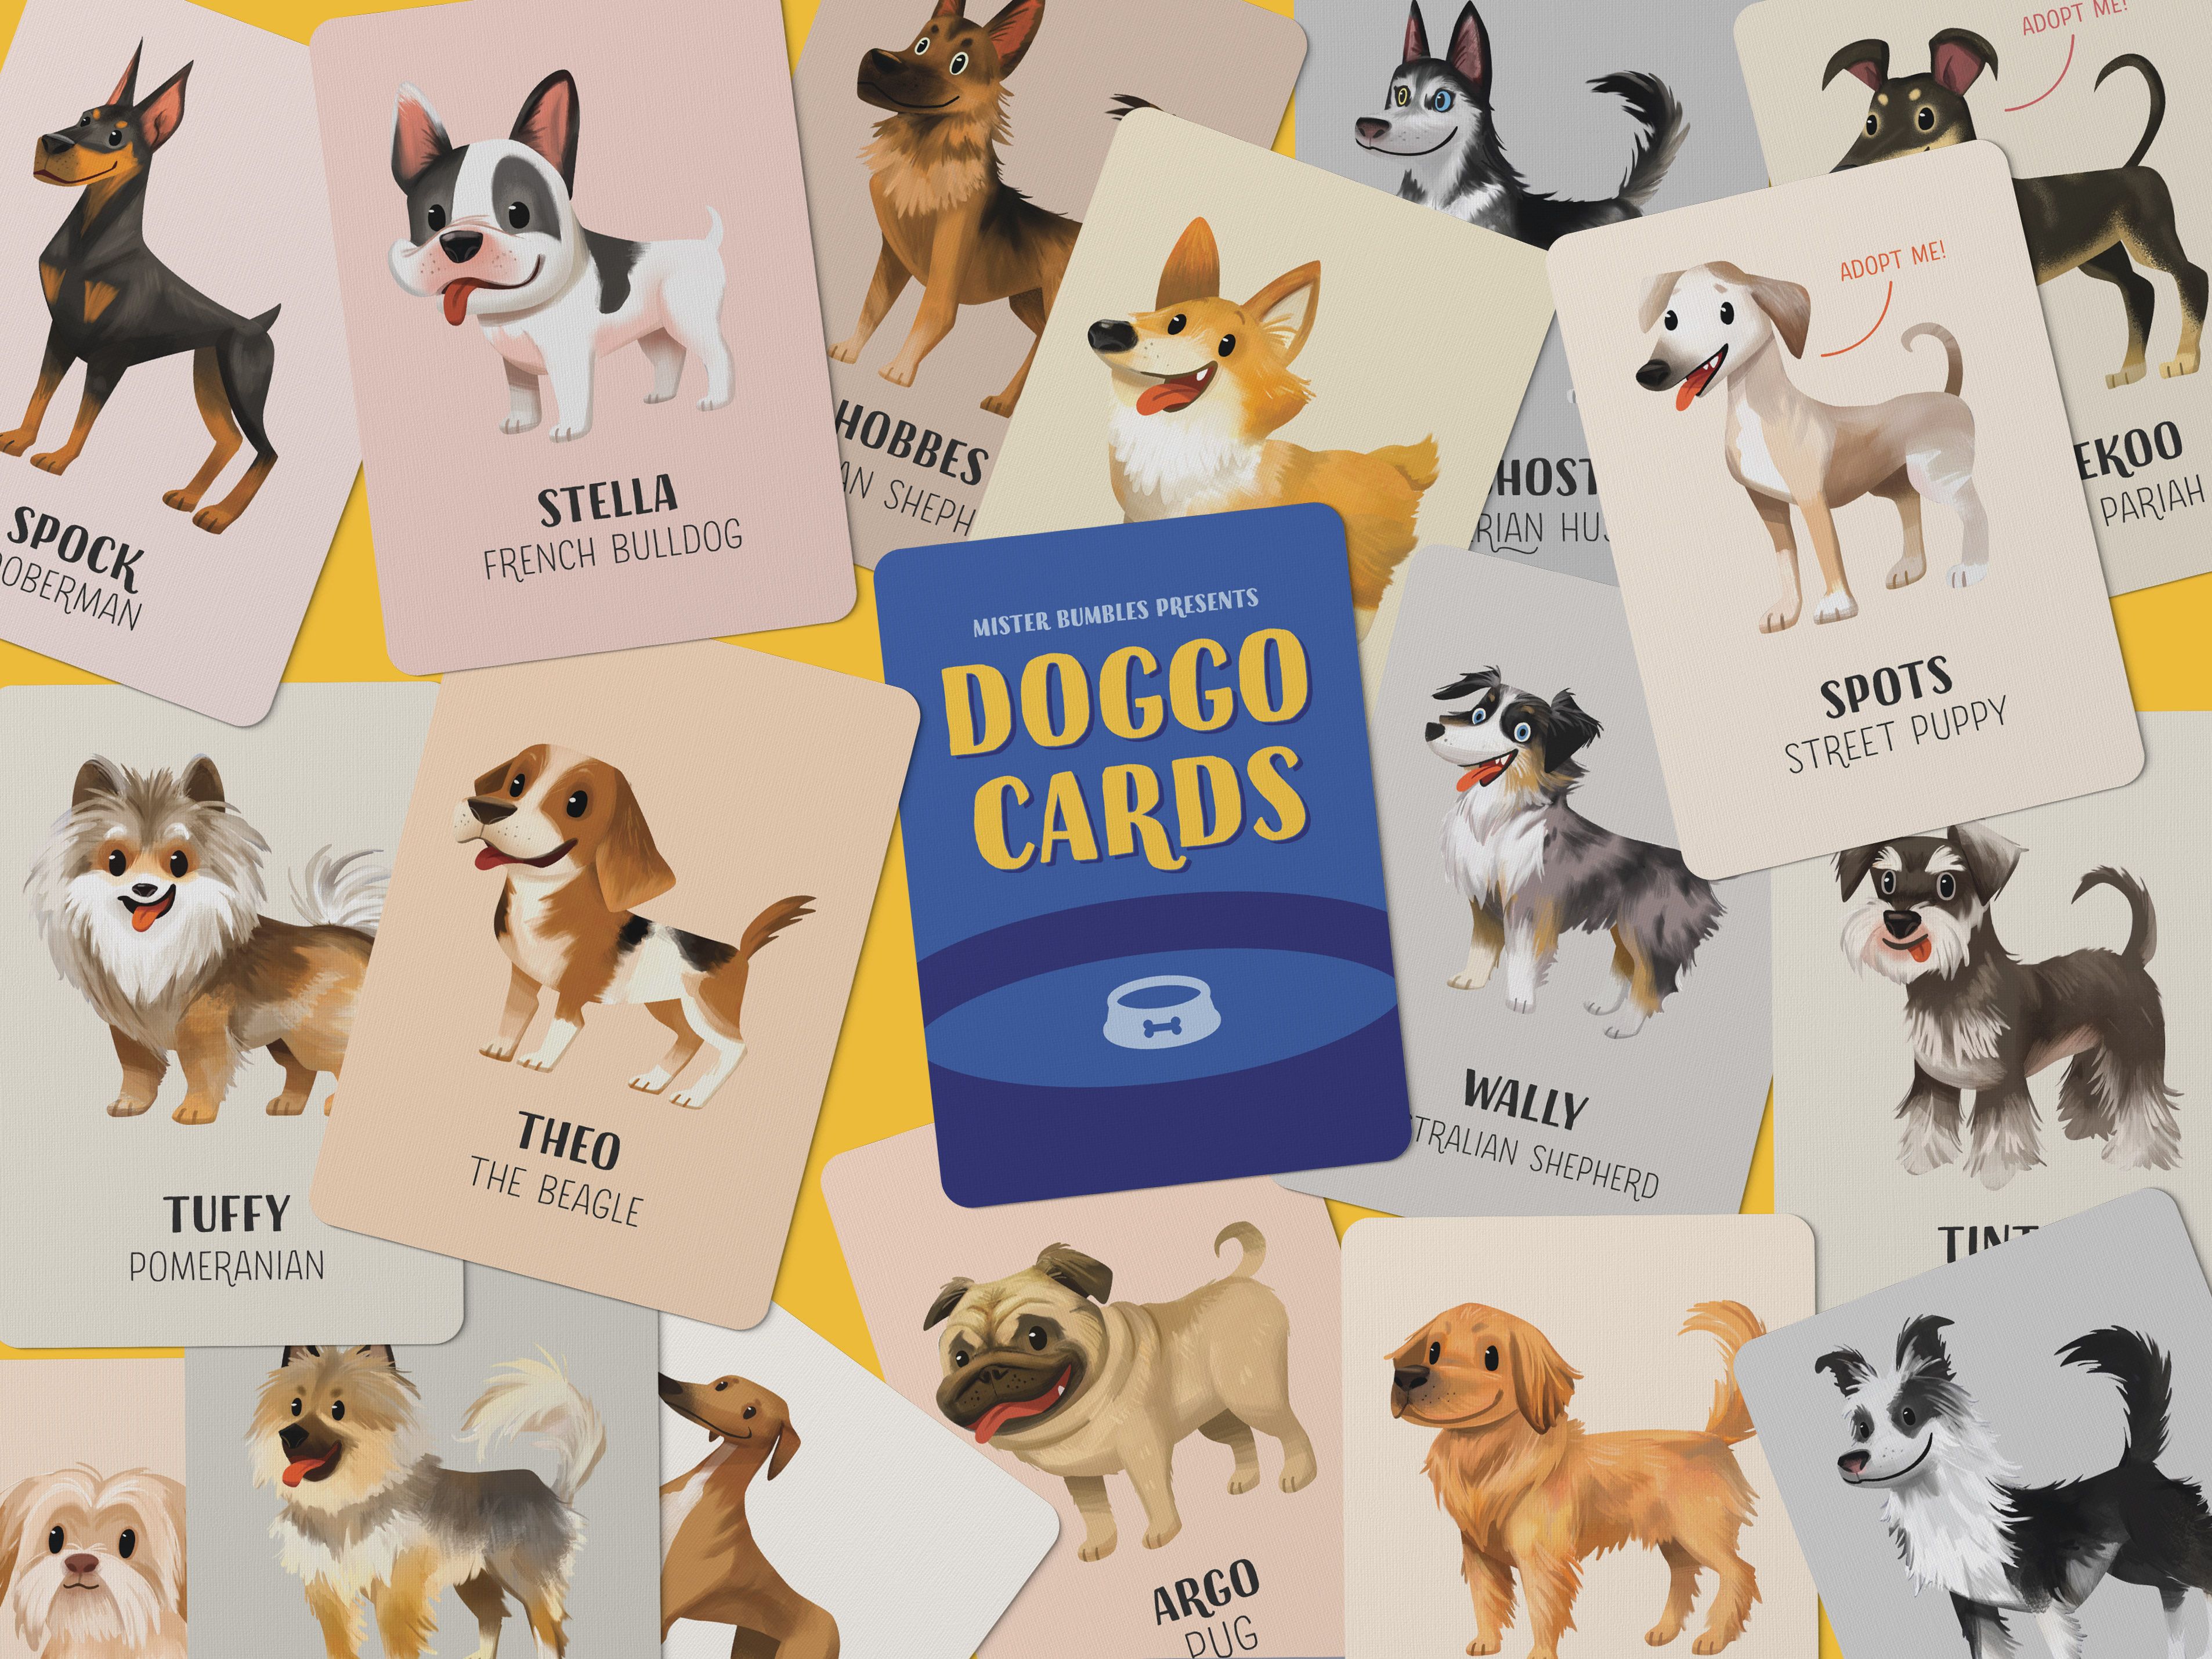 Doggo Cards: Three in One Classic Card Game